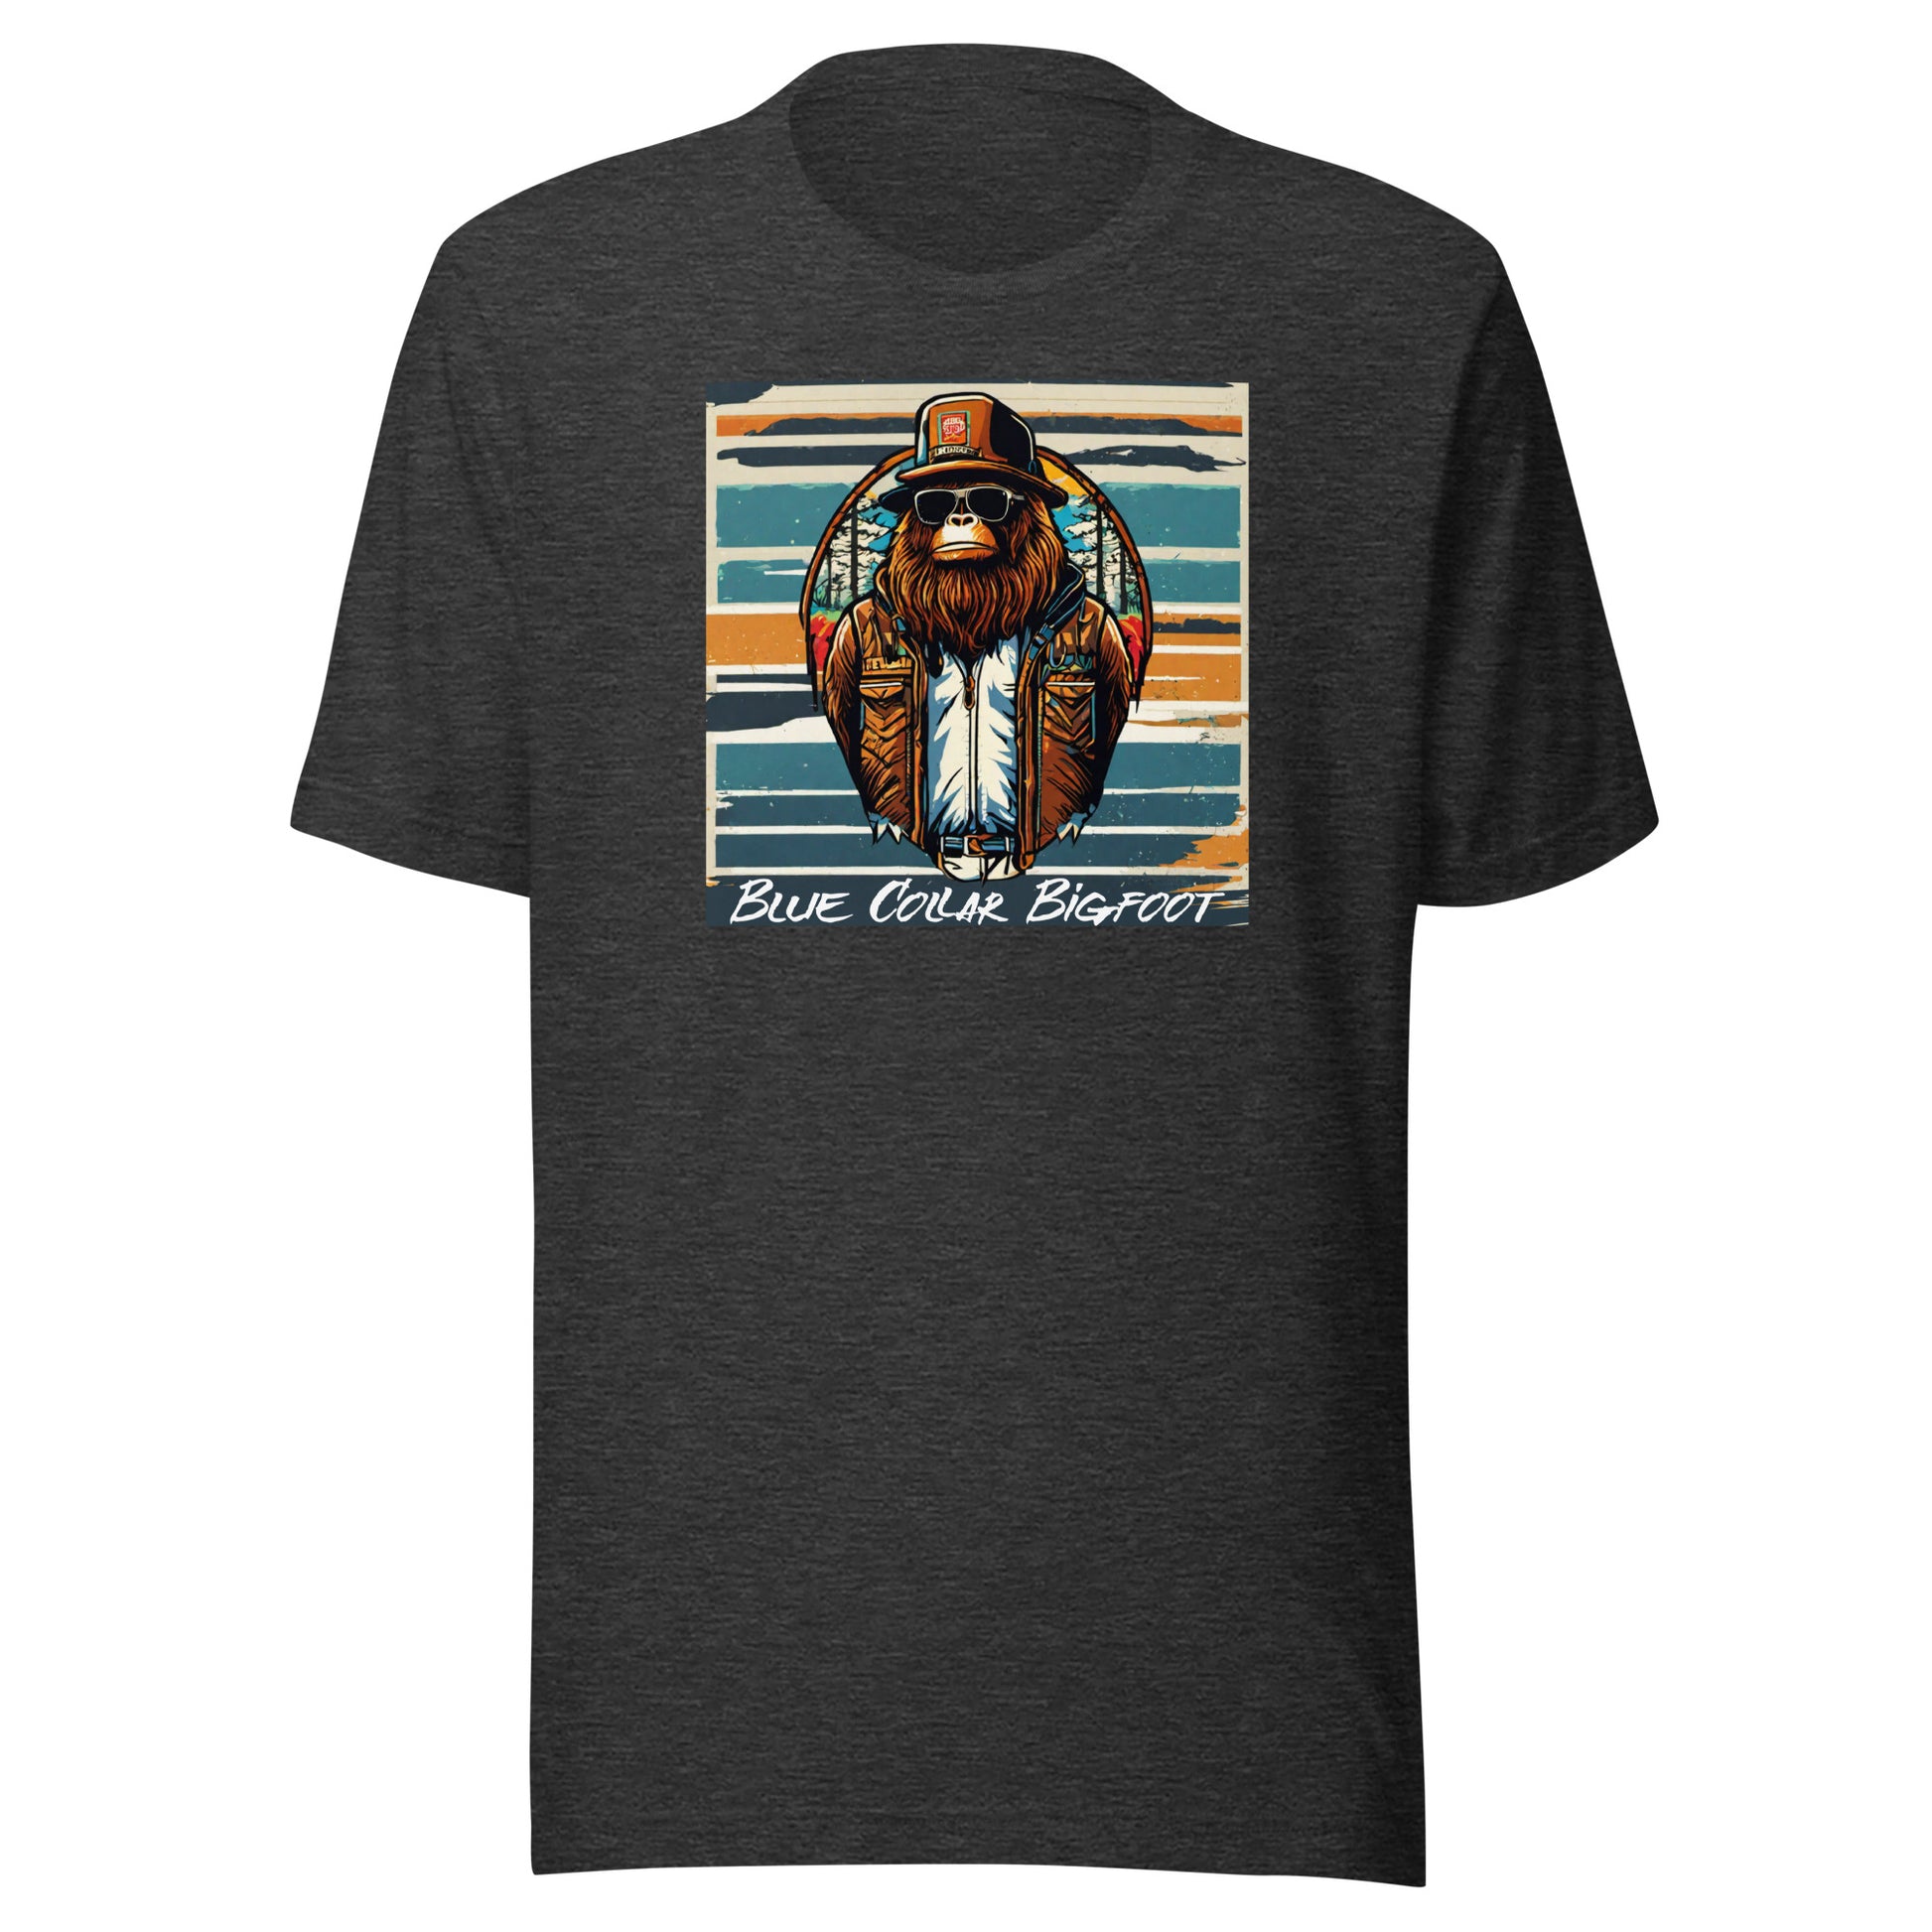 Blue-Collar Bigfoot Men's Graphic T-Shirt Dark Grey Heather